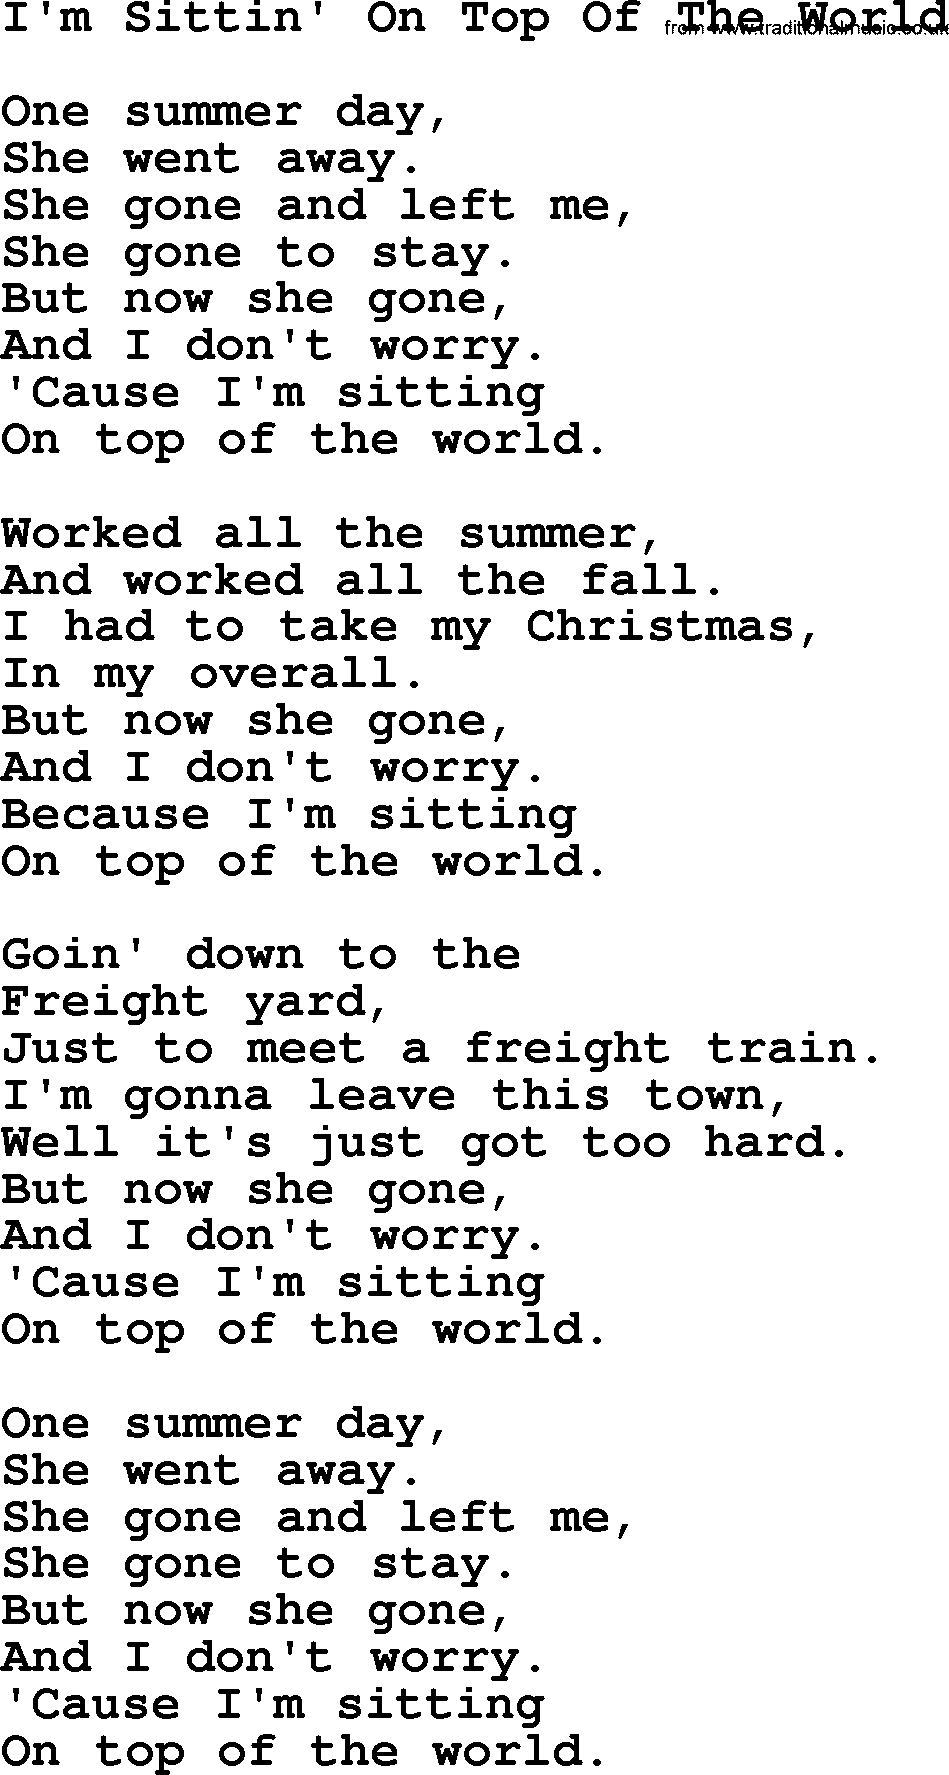 Willie Nelson song: I'm Sittin' On Top Of The World lyrics